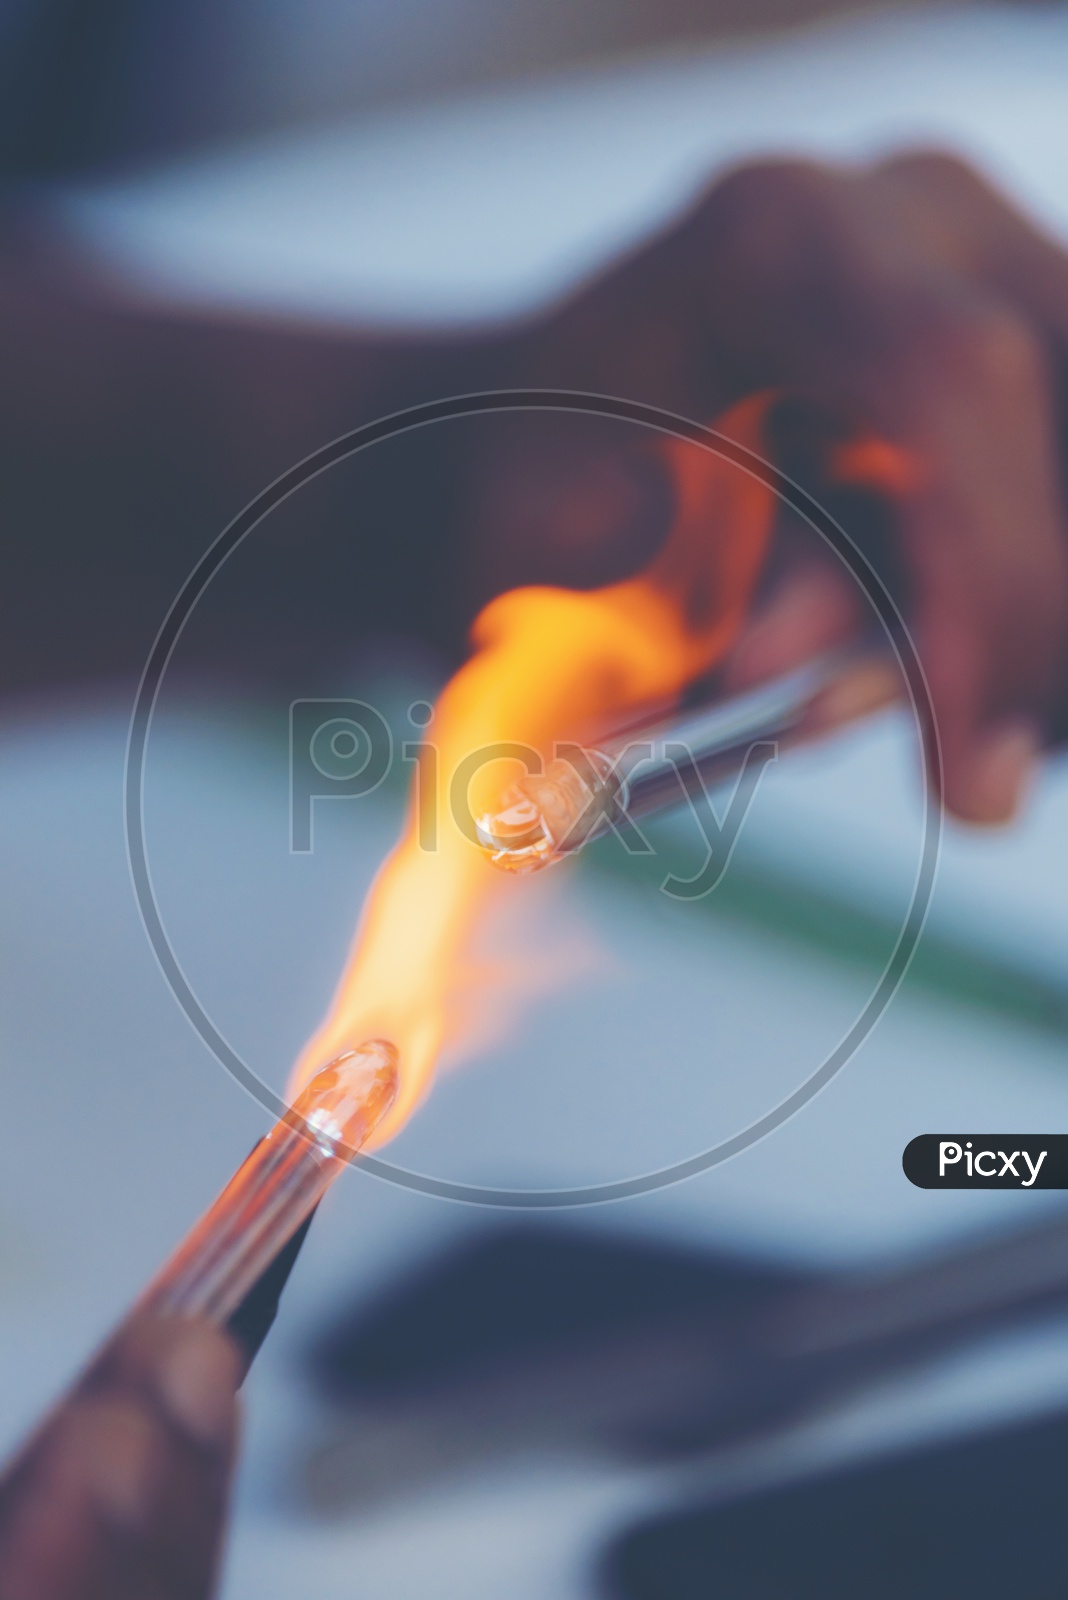 Industry steel, Background peeling of slab, Flakes flame by blowing gas.